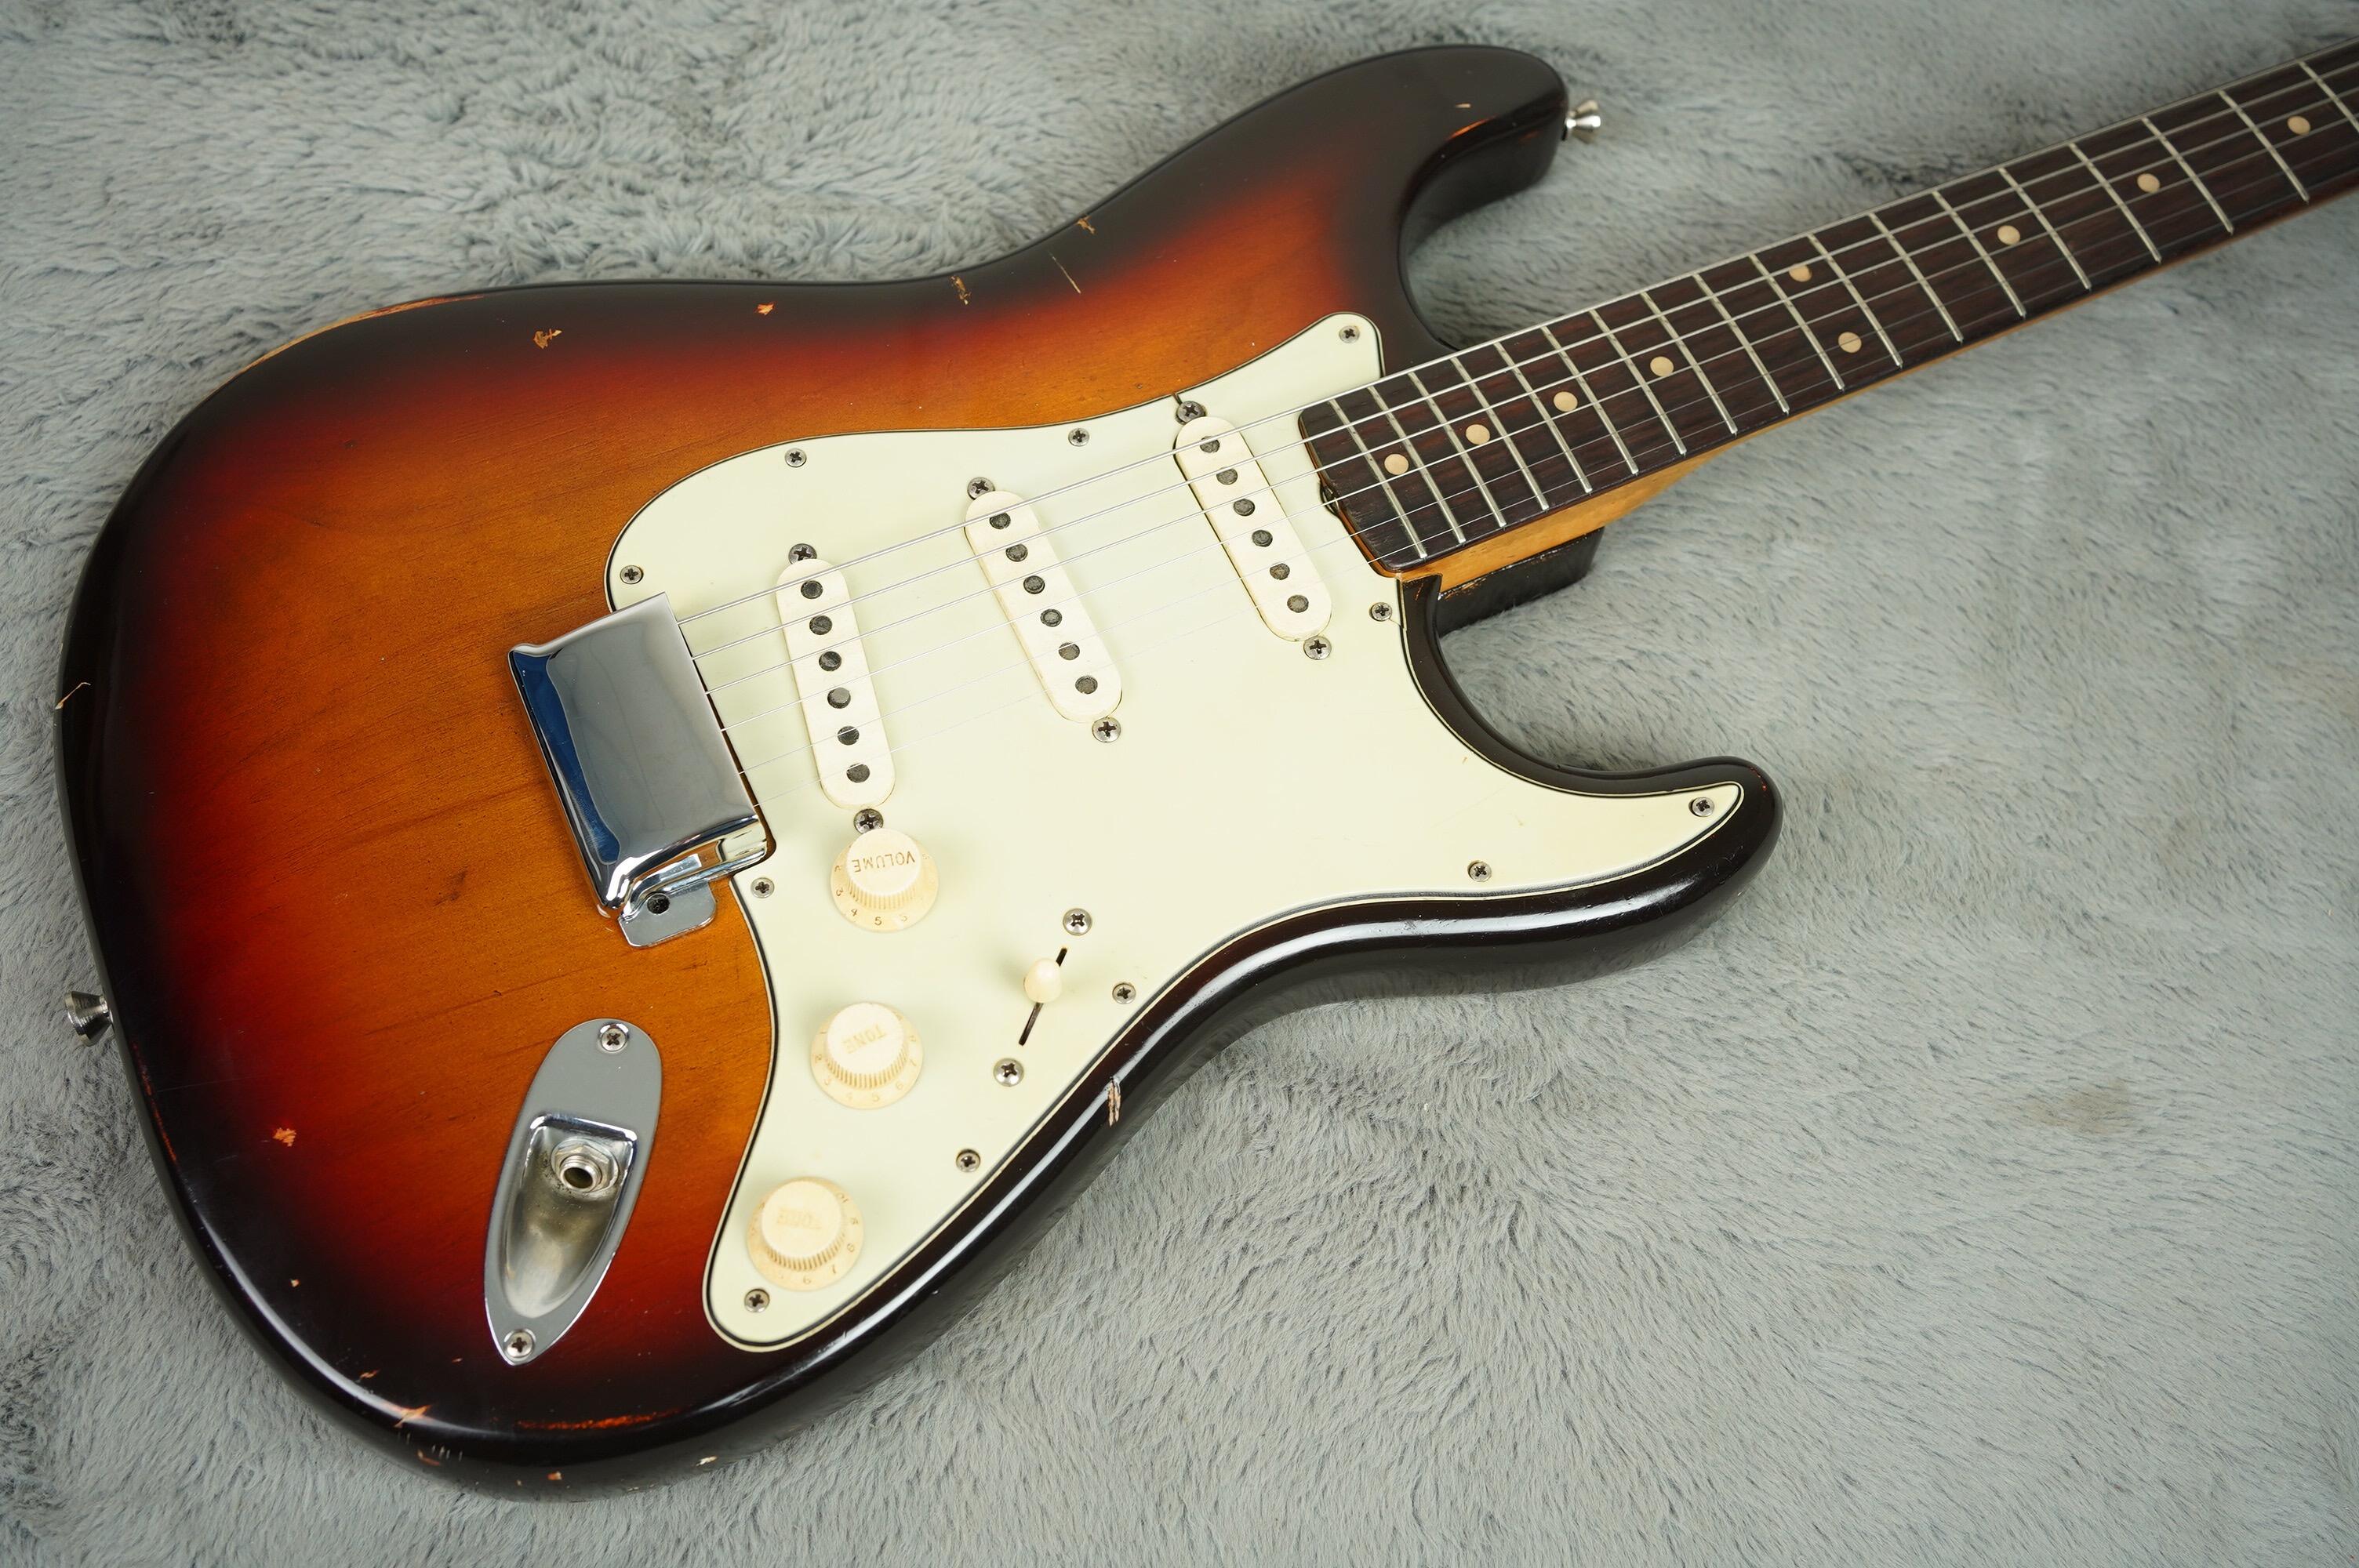 1961 Fender Stratocaster refin